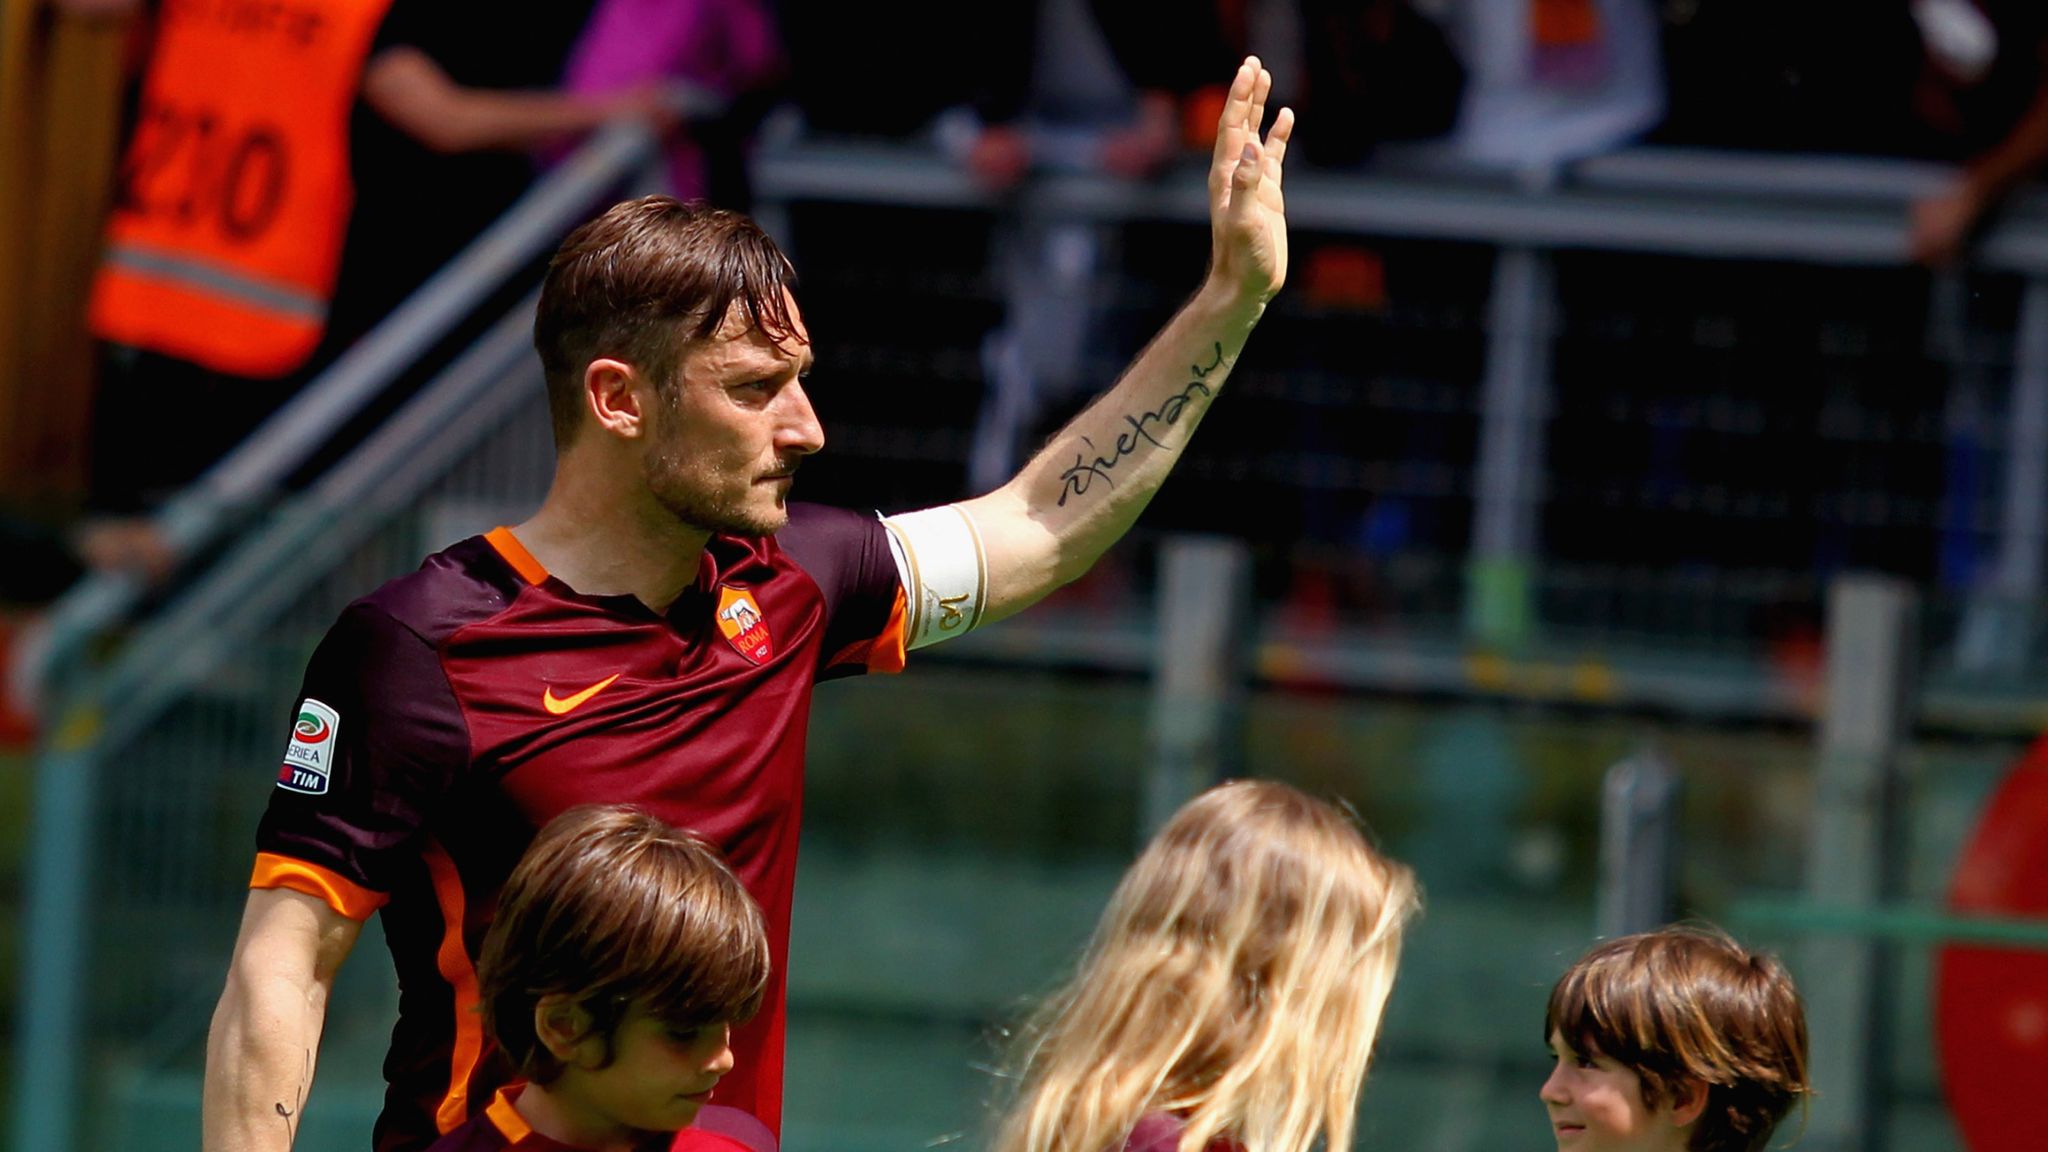 Genoa Celebrates Totti with Special Jersey - Footy Headlines